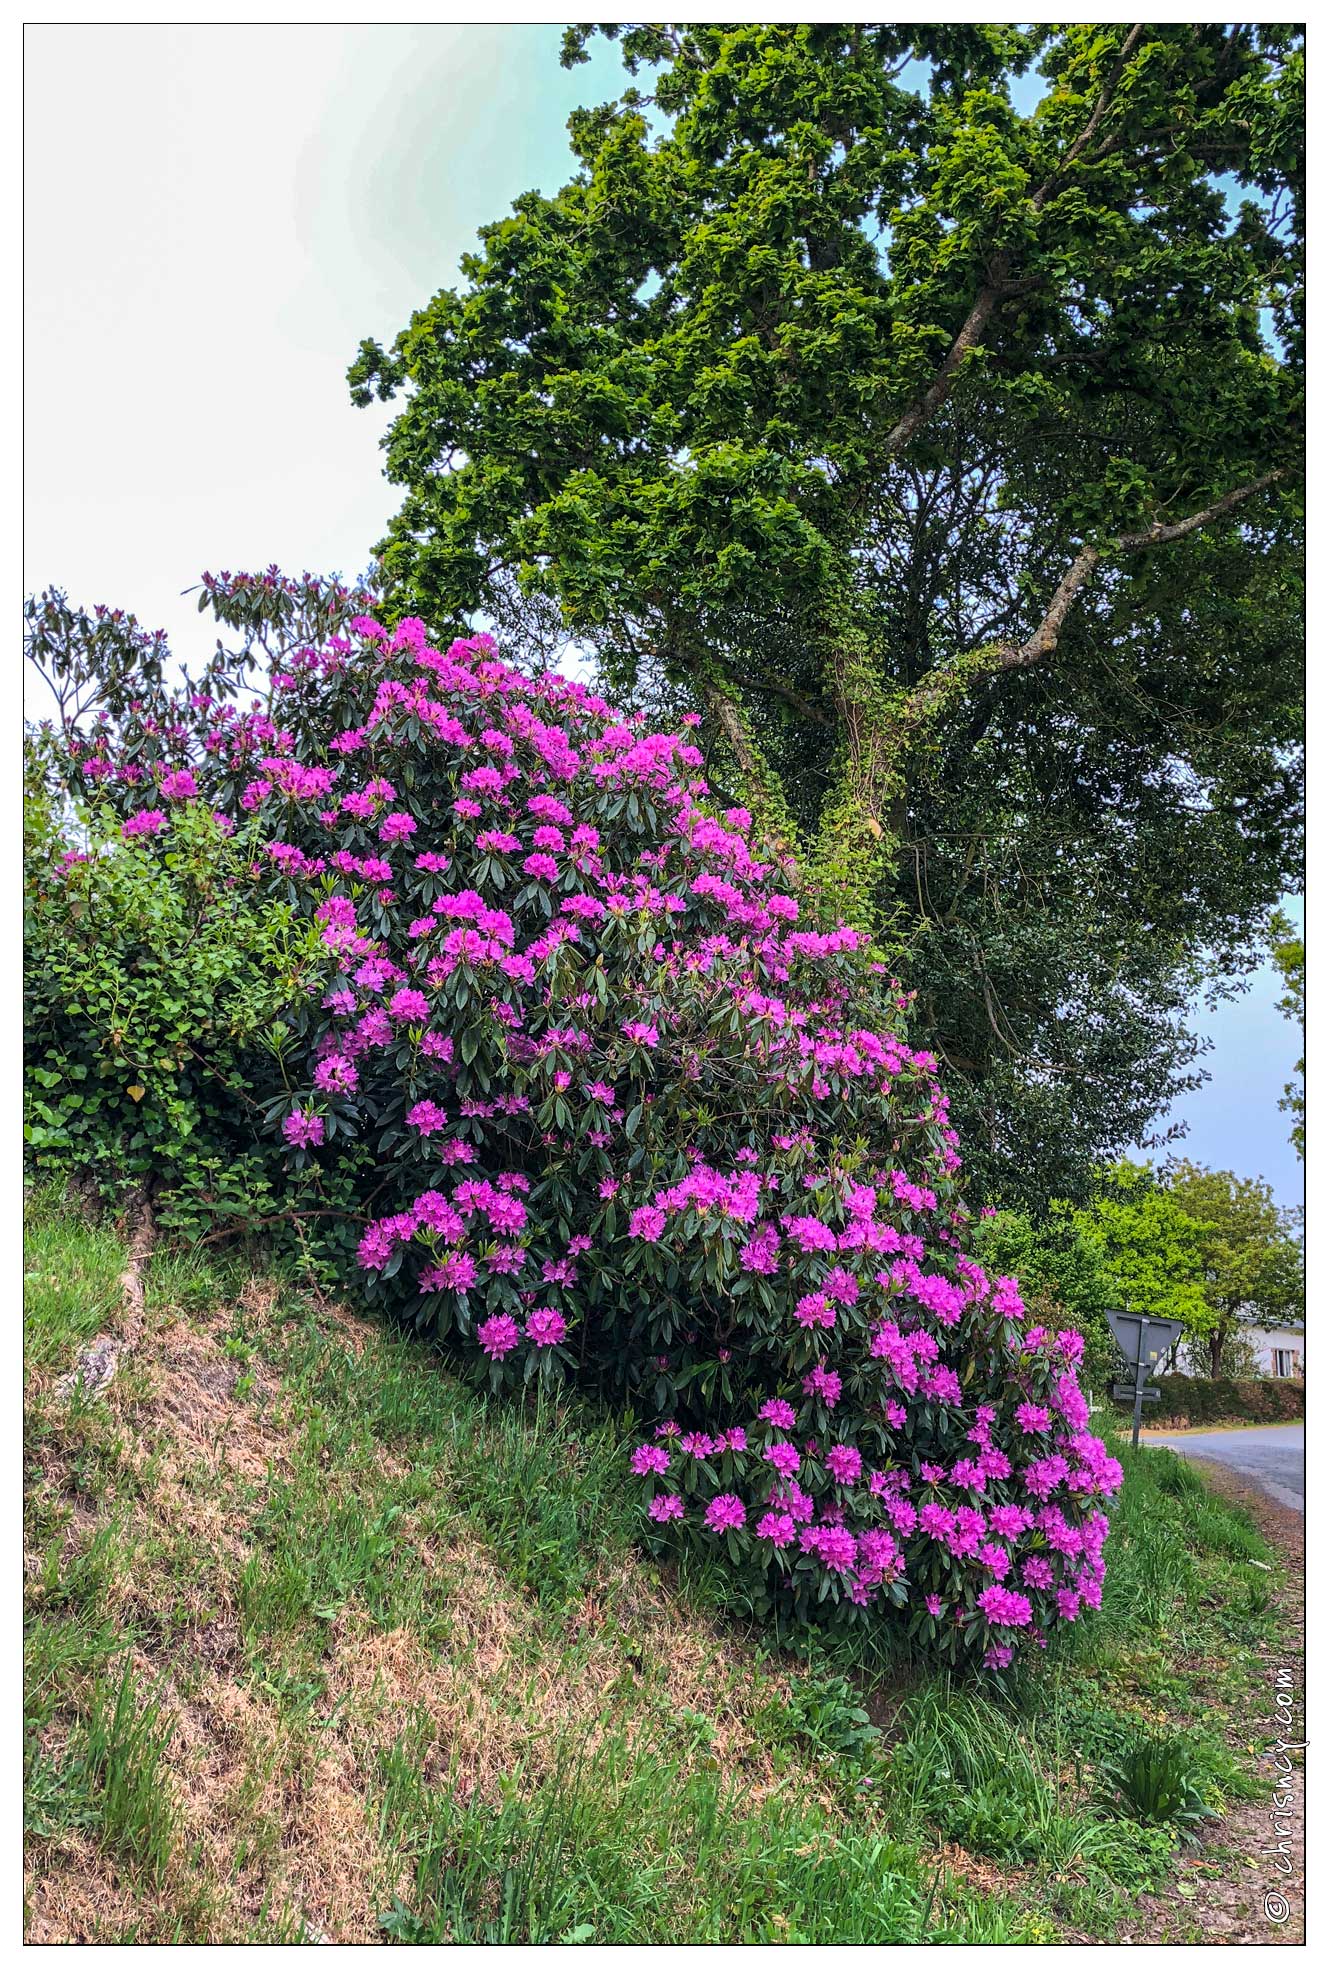 20180516-004_1896-Rhododendron.jpg